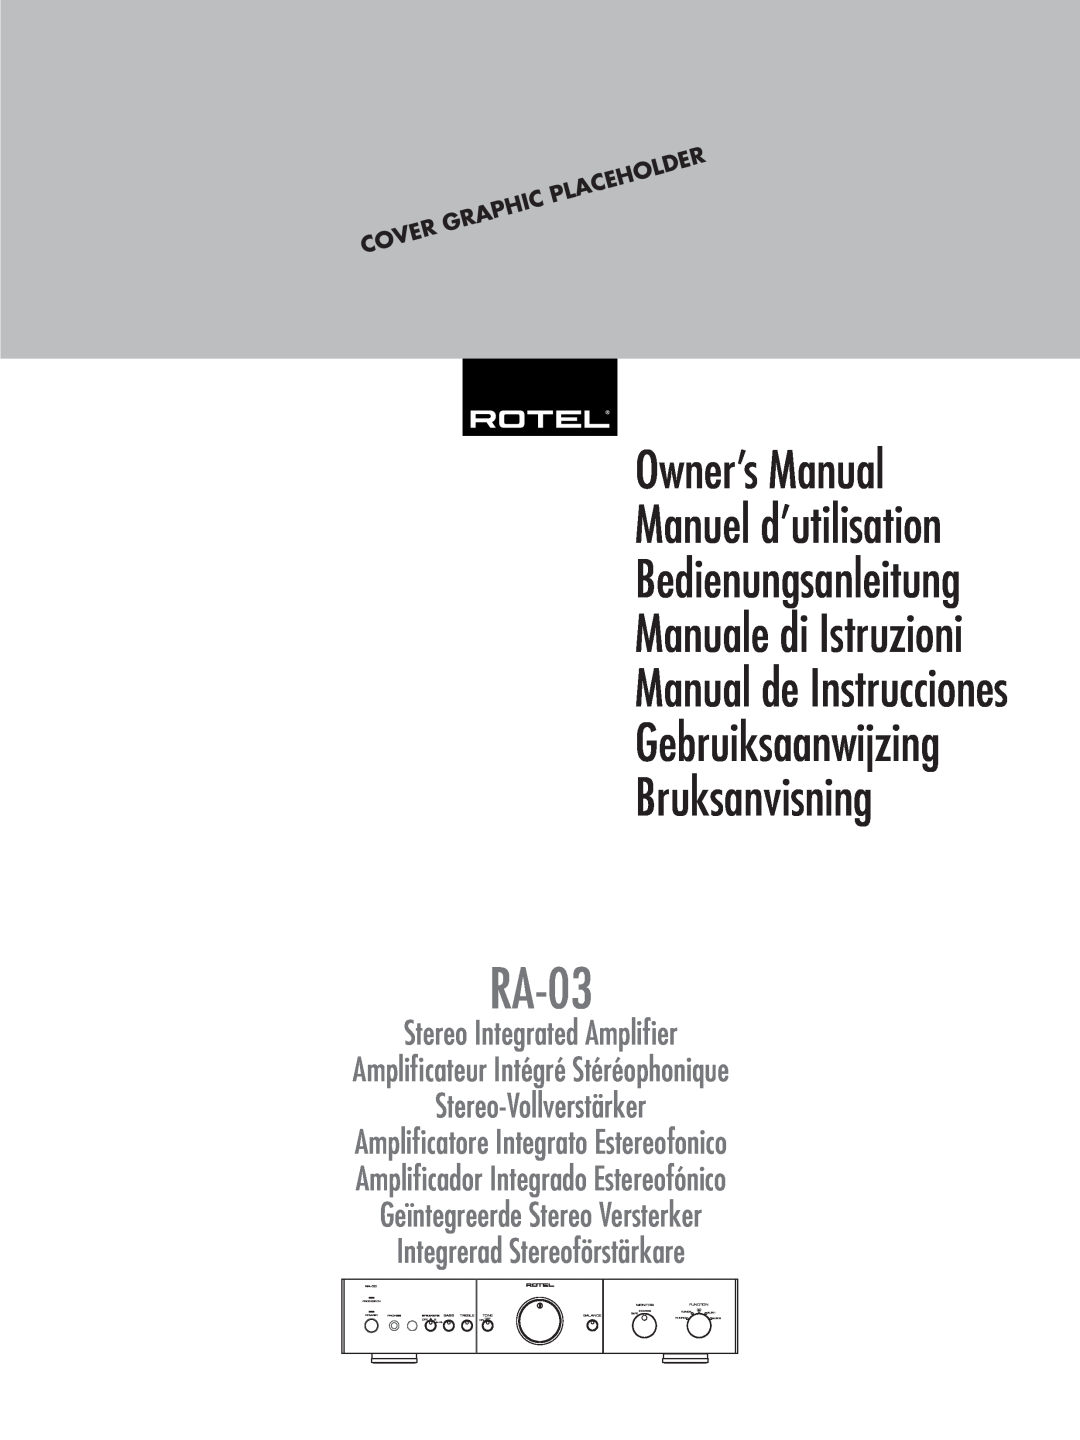 Rotel RA-03 owner manual Manual de Instrucciones Gebruiksaanwijzing, Bruksanvisning, Manuale di Istruzioni 